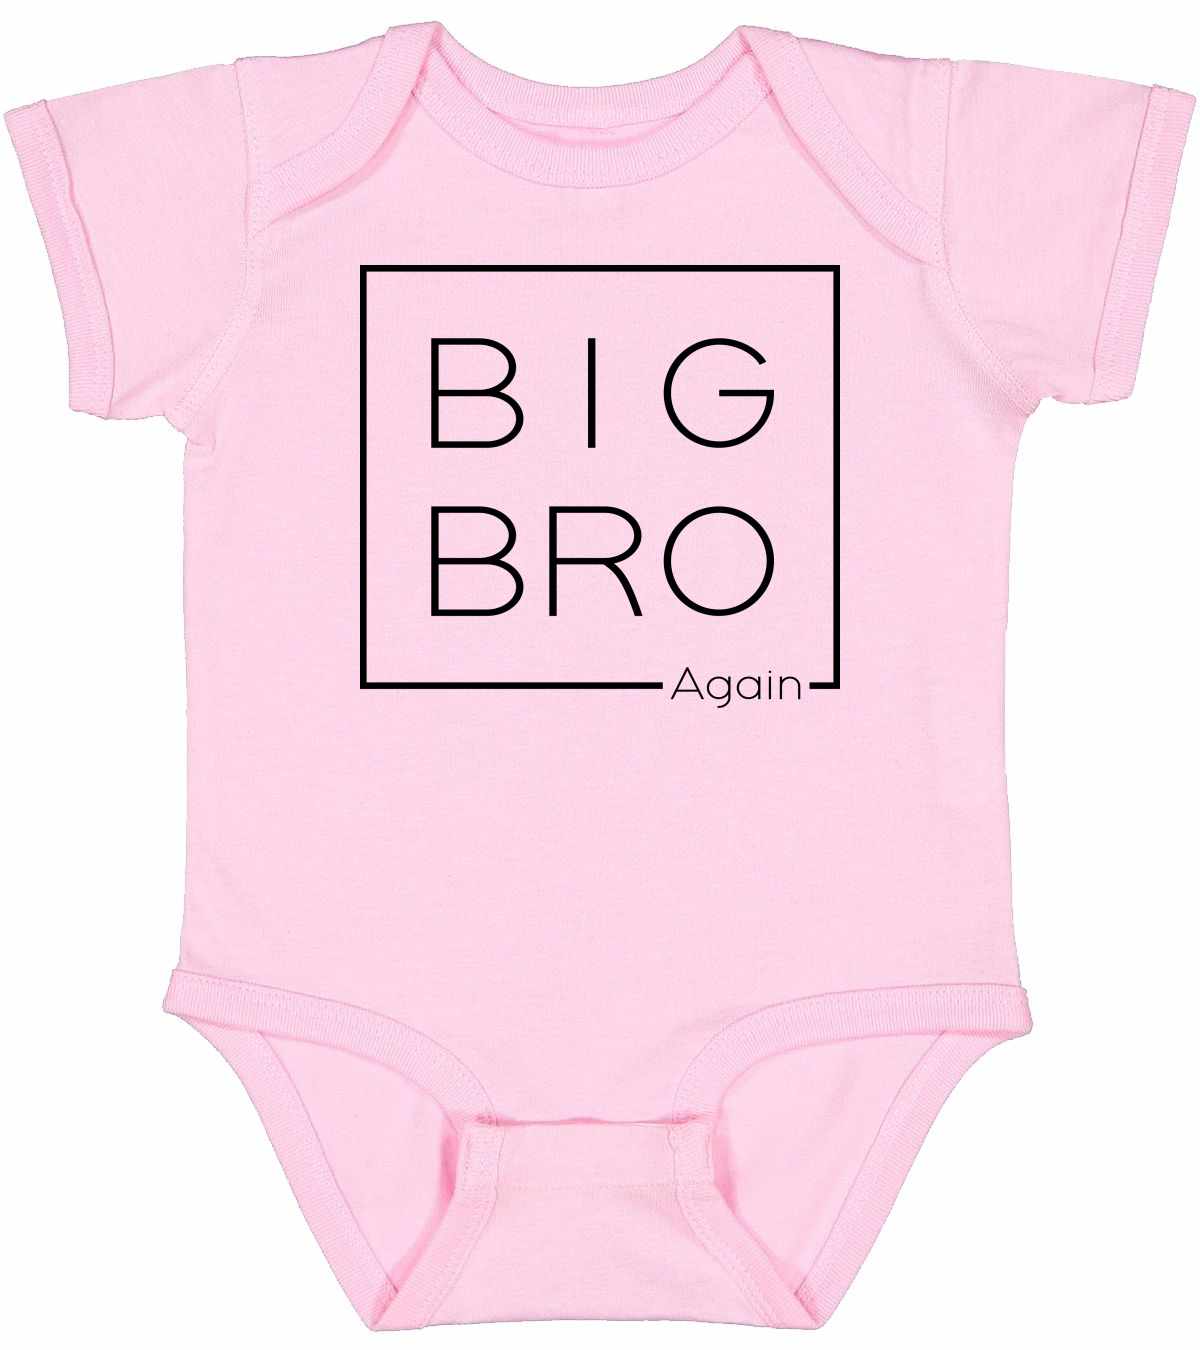 Big Bro Again- Big Brother Box on Infant BodySuit (#1311-10)